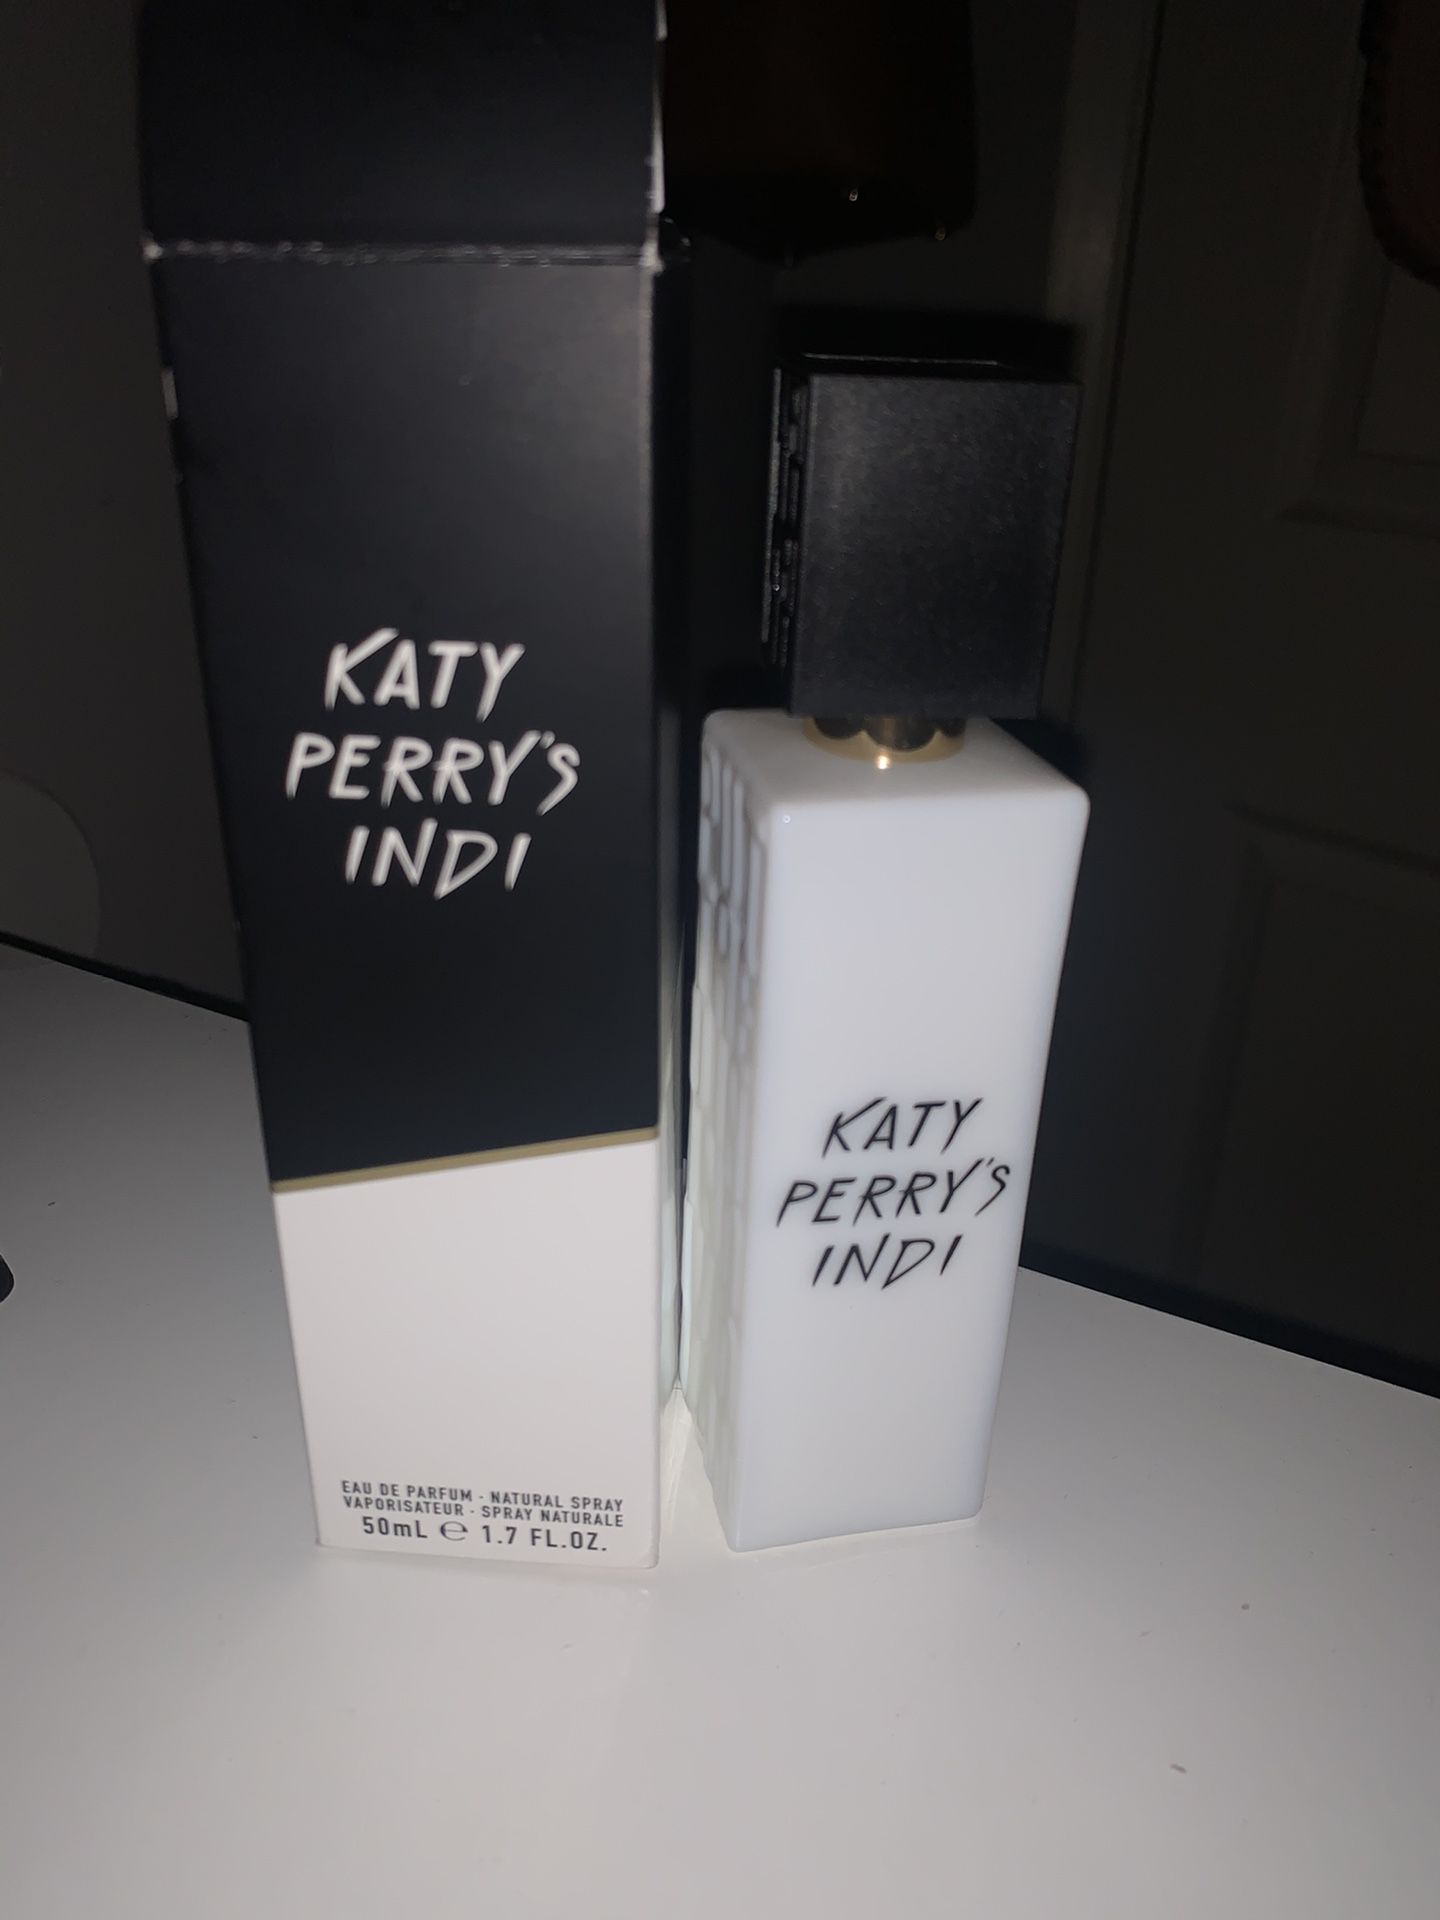 New Katy Perry’s perfume